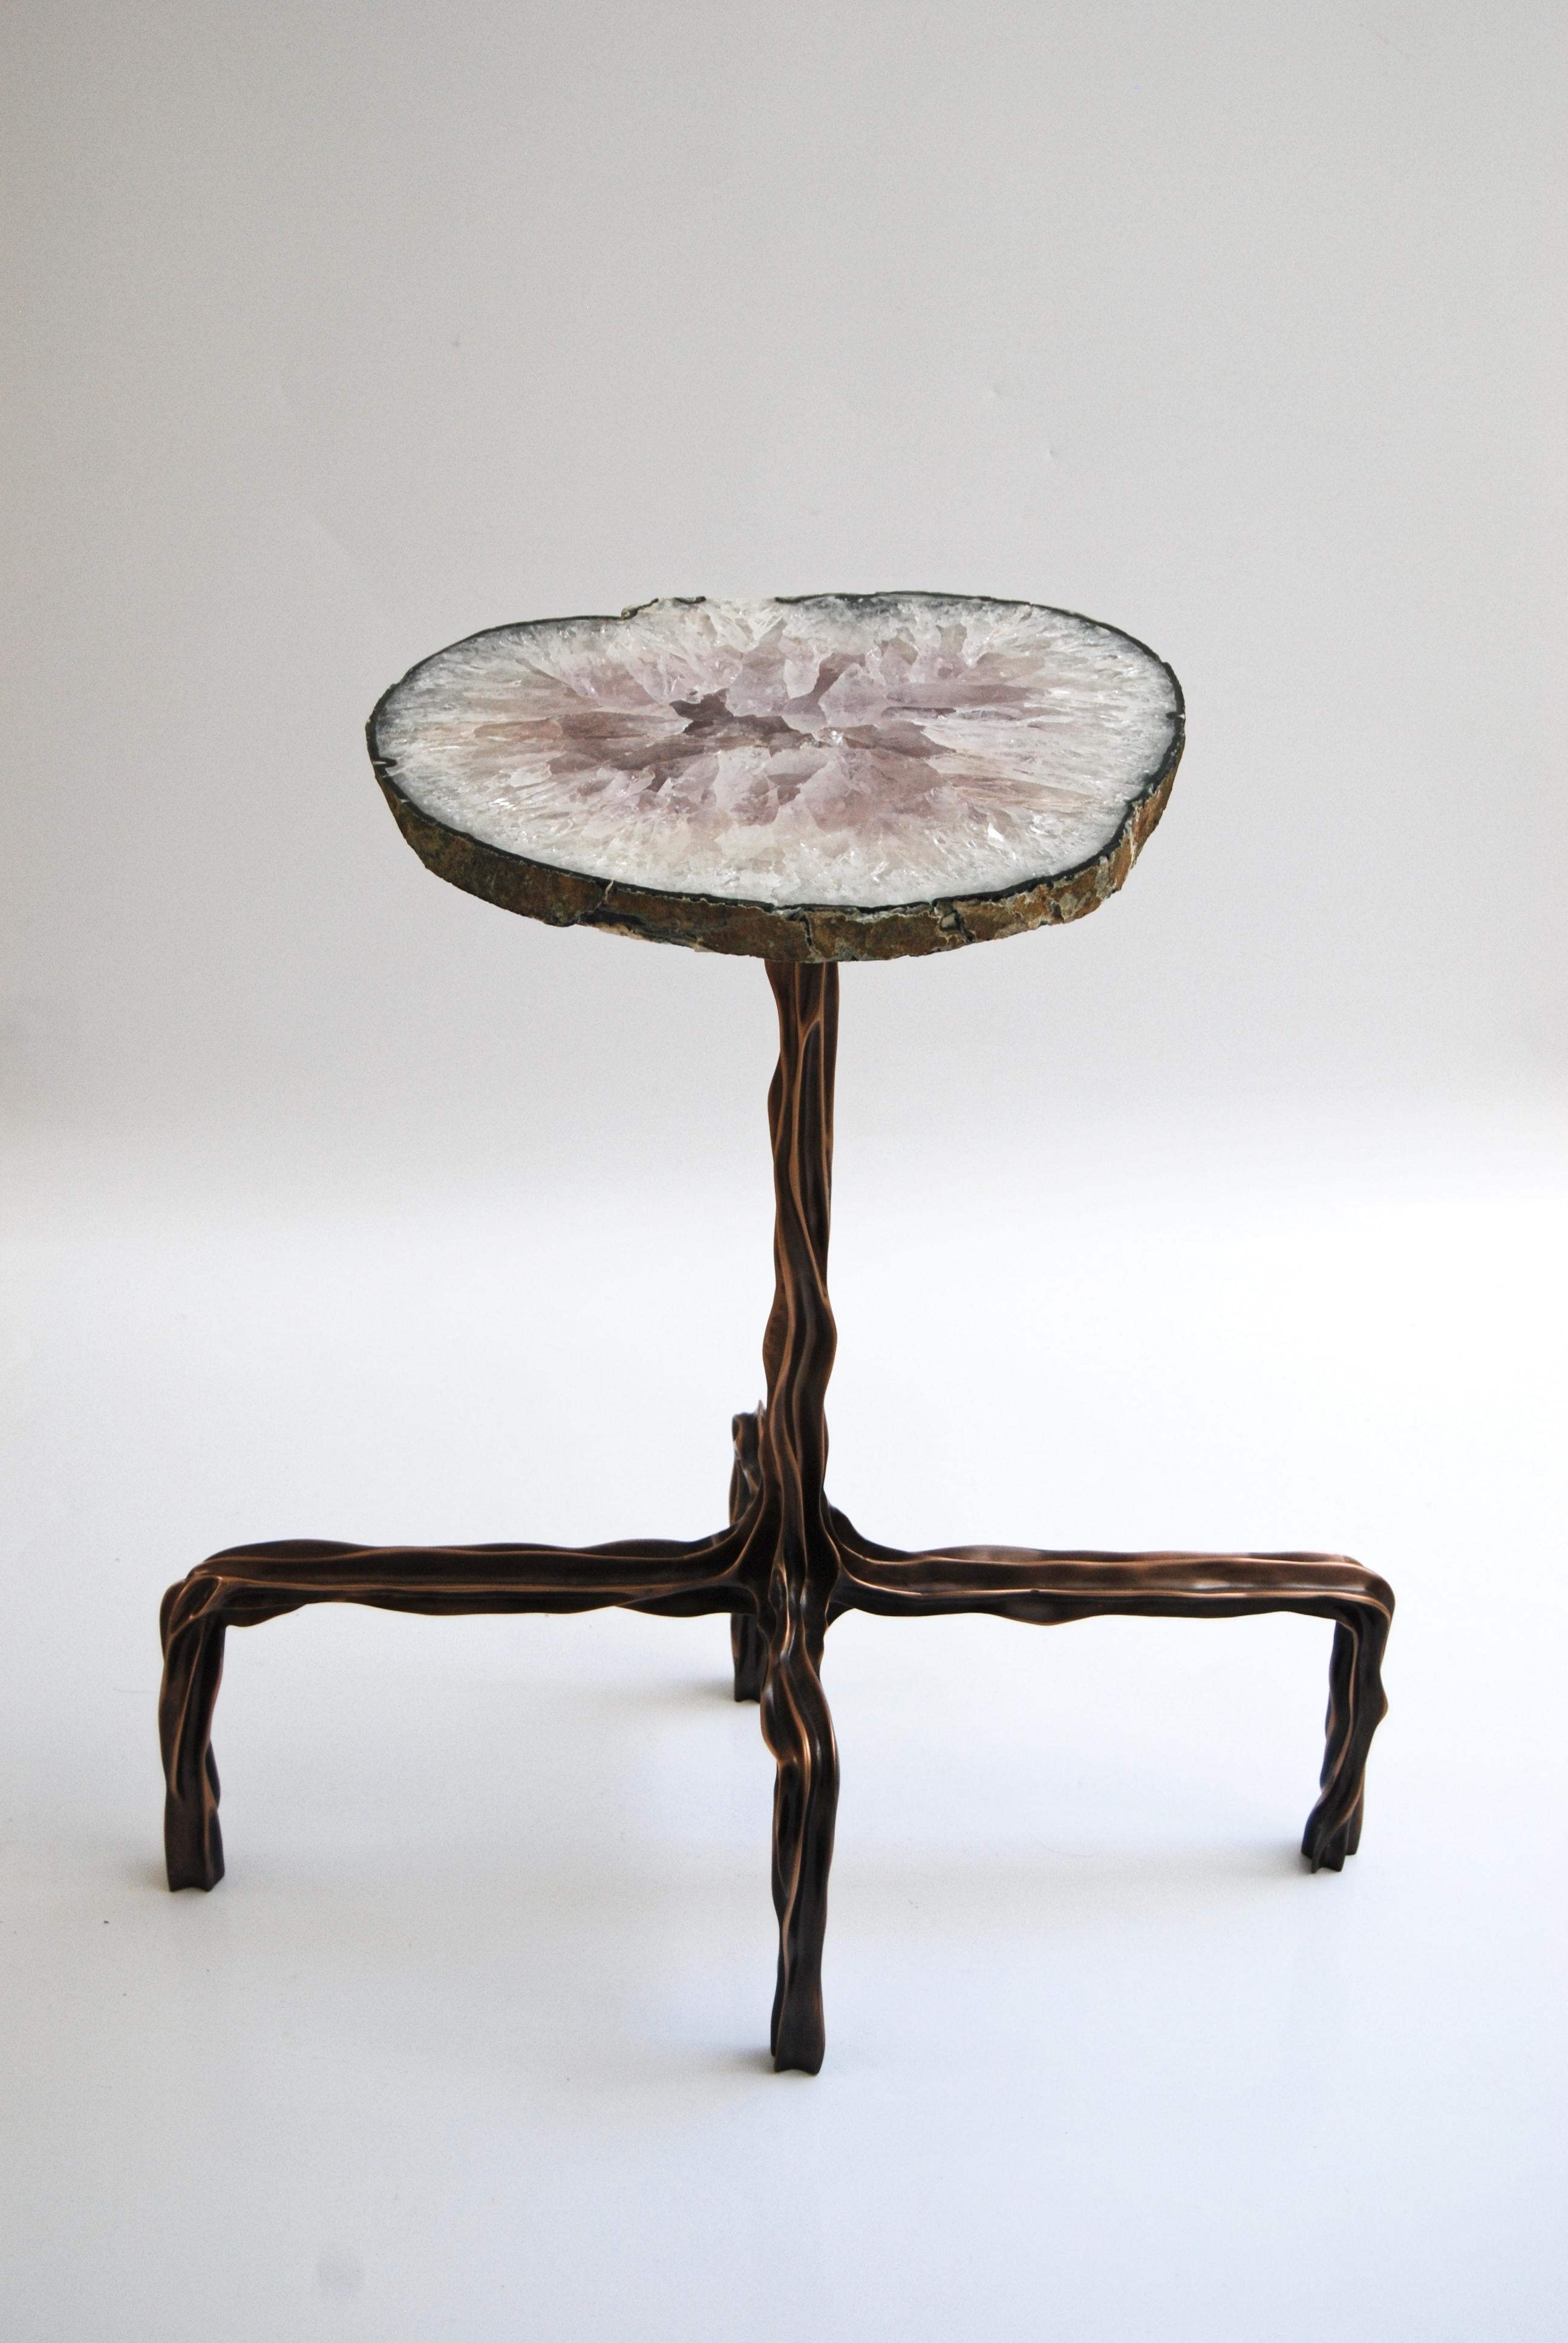 Brazilian Dark Bronze Side Table with Onyx Top by FAKASAKA Design